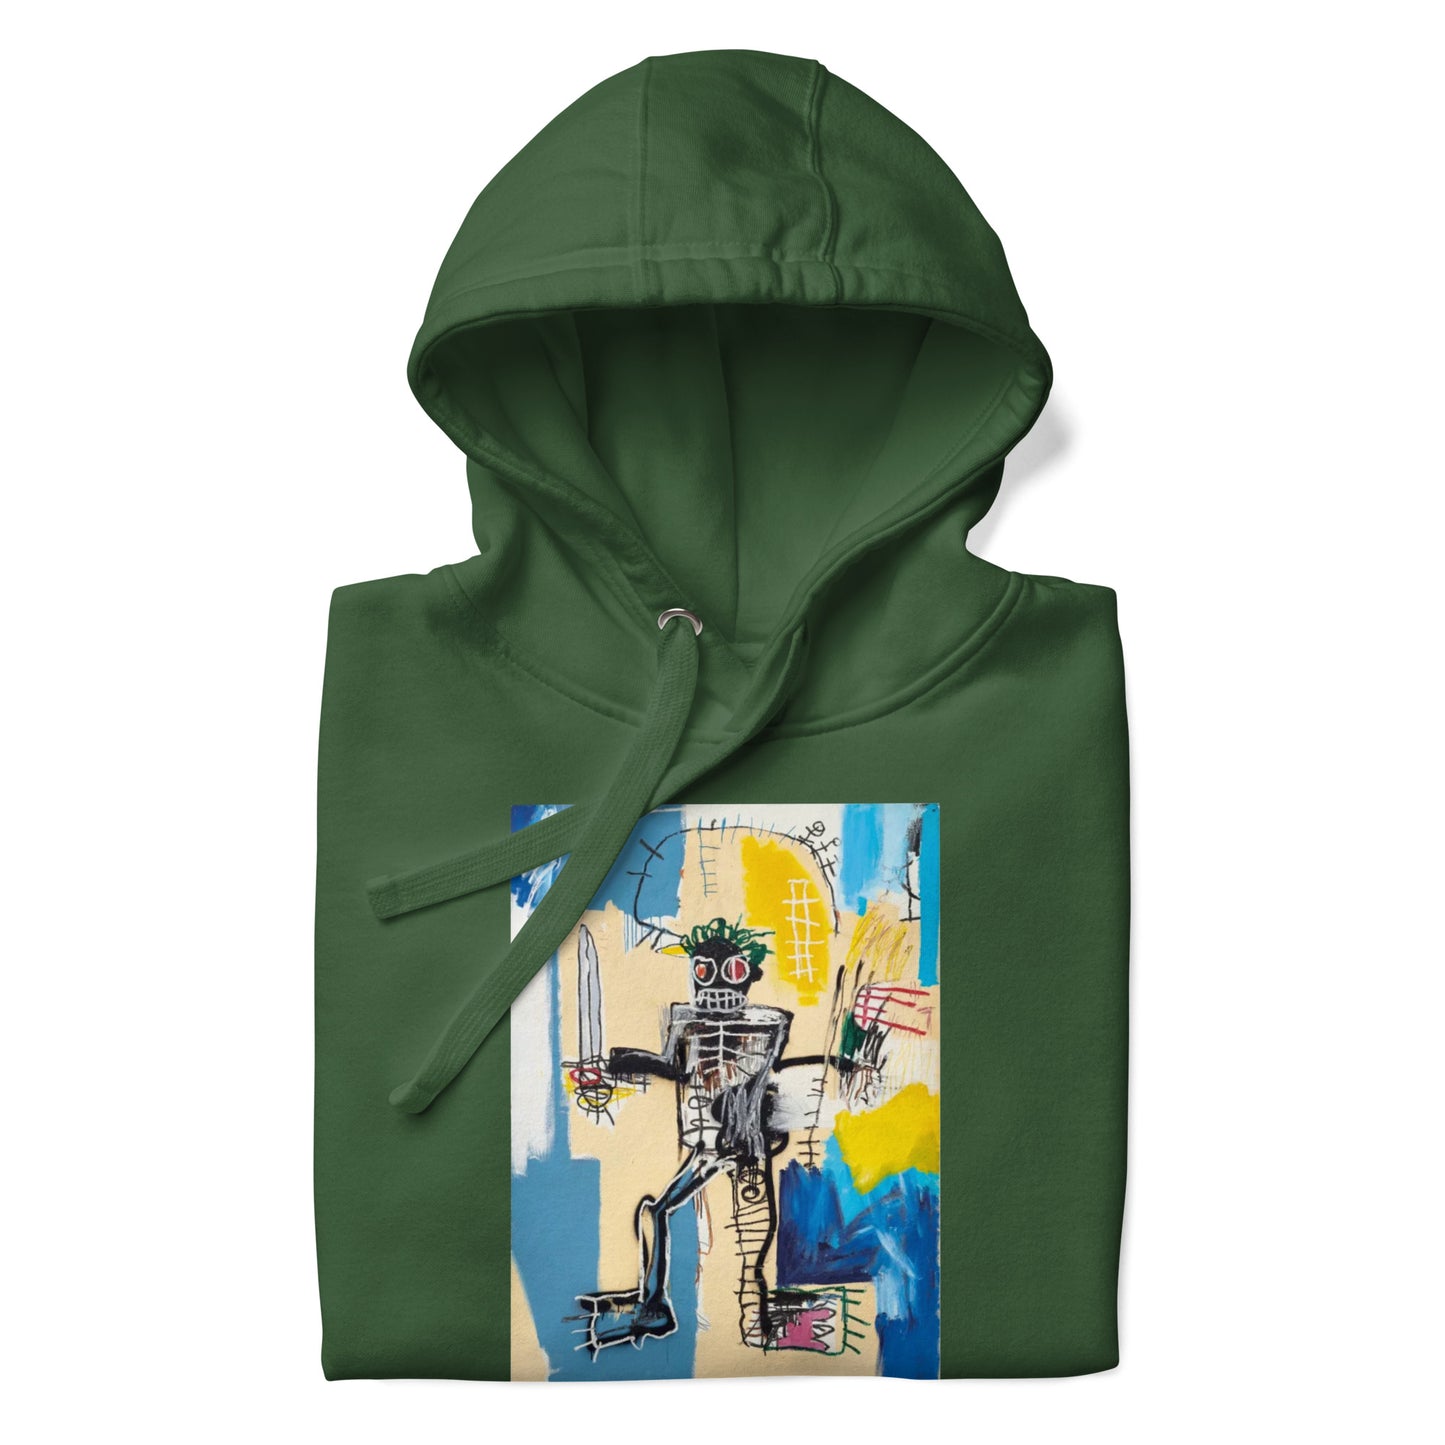 Jean-Michel Basquiat "Warrior" Artwork Printed Premium Streetwear Sweatshirt Hoodie Forest Green